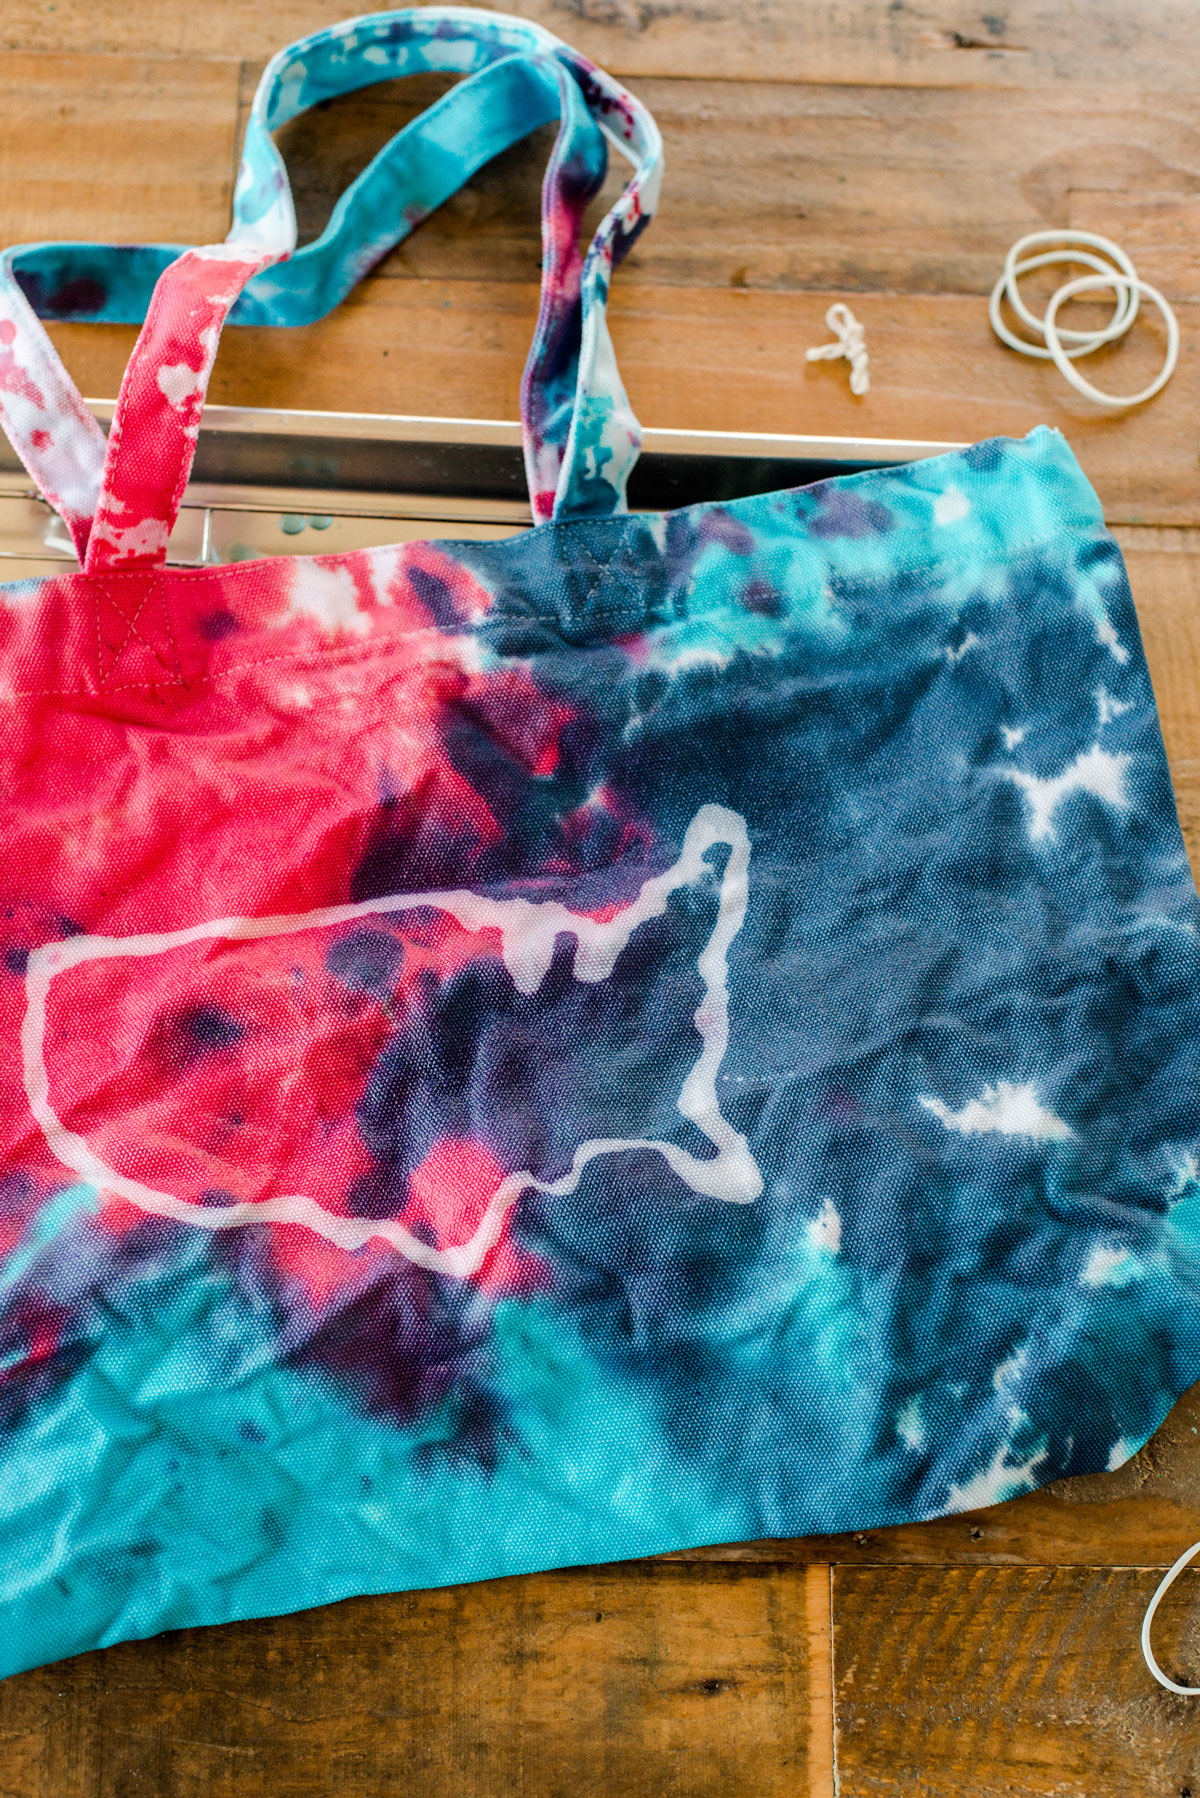 Patriotic United States resist beach bag Tie Dye technique